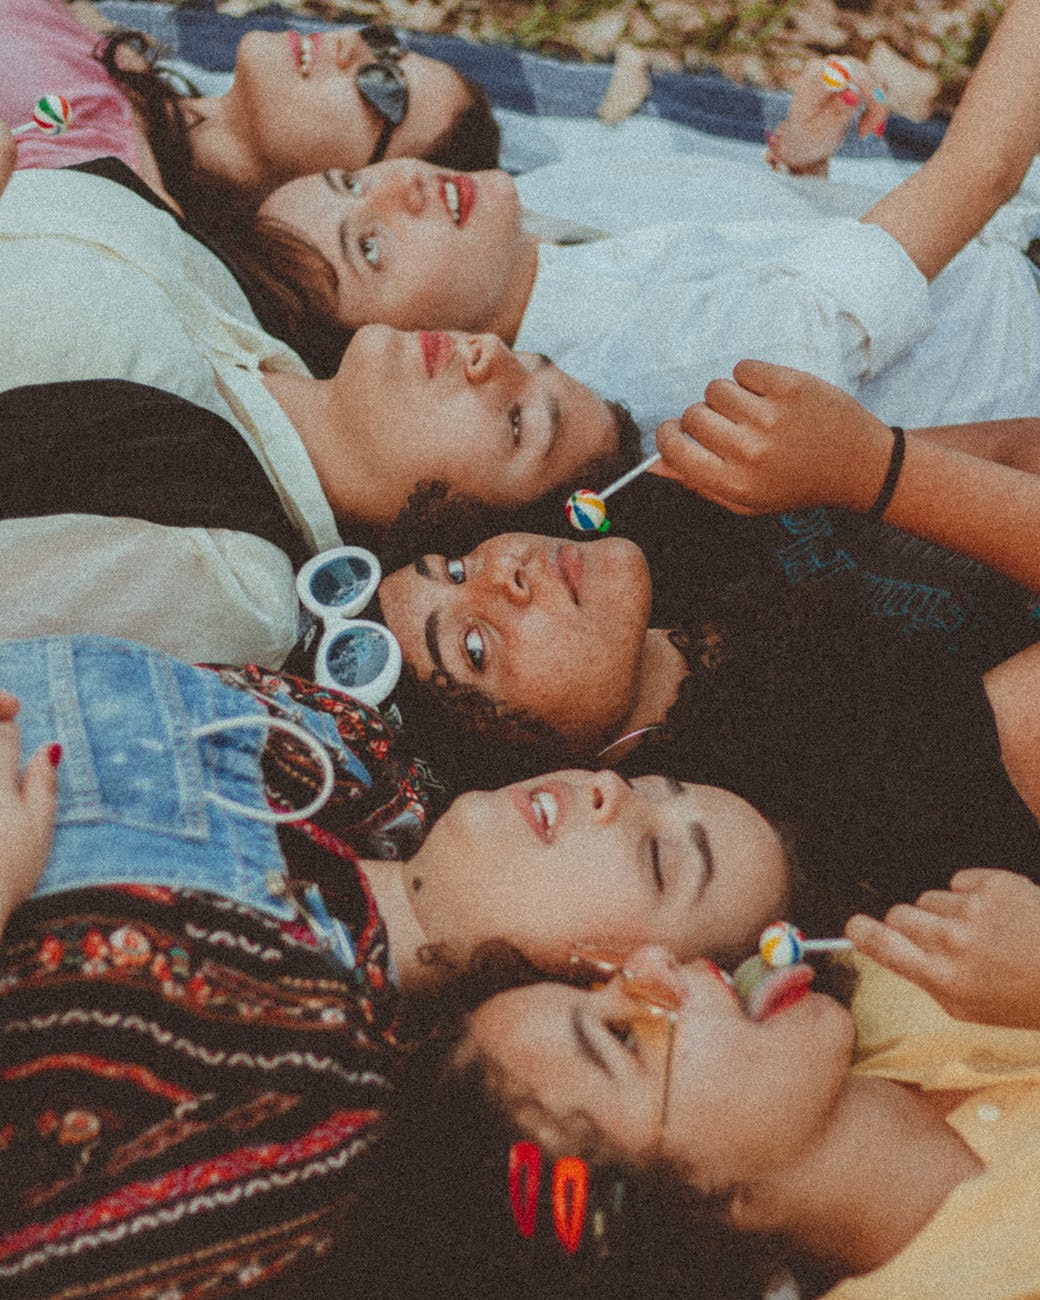 group of woman lying on blanket eating lollipops